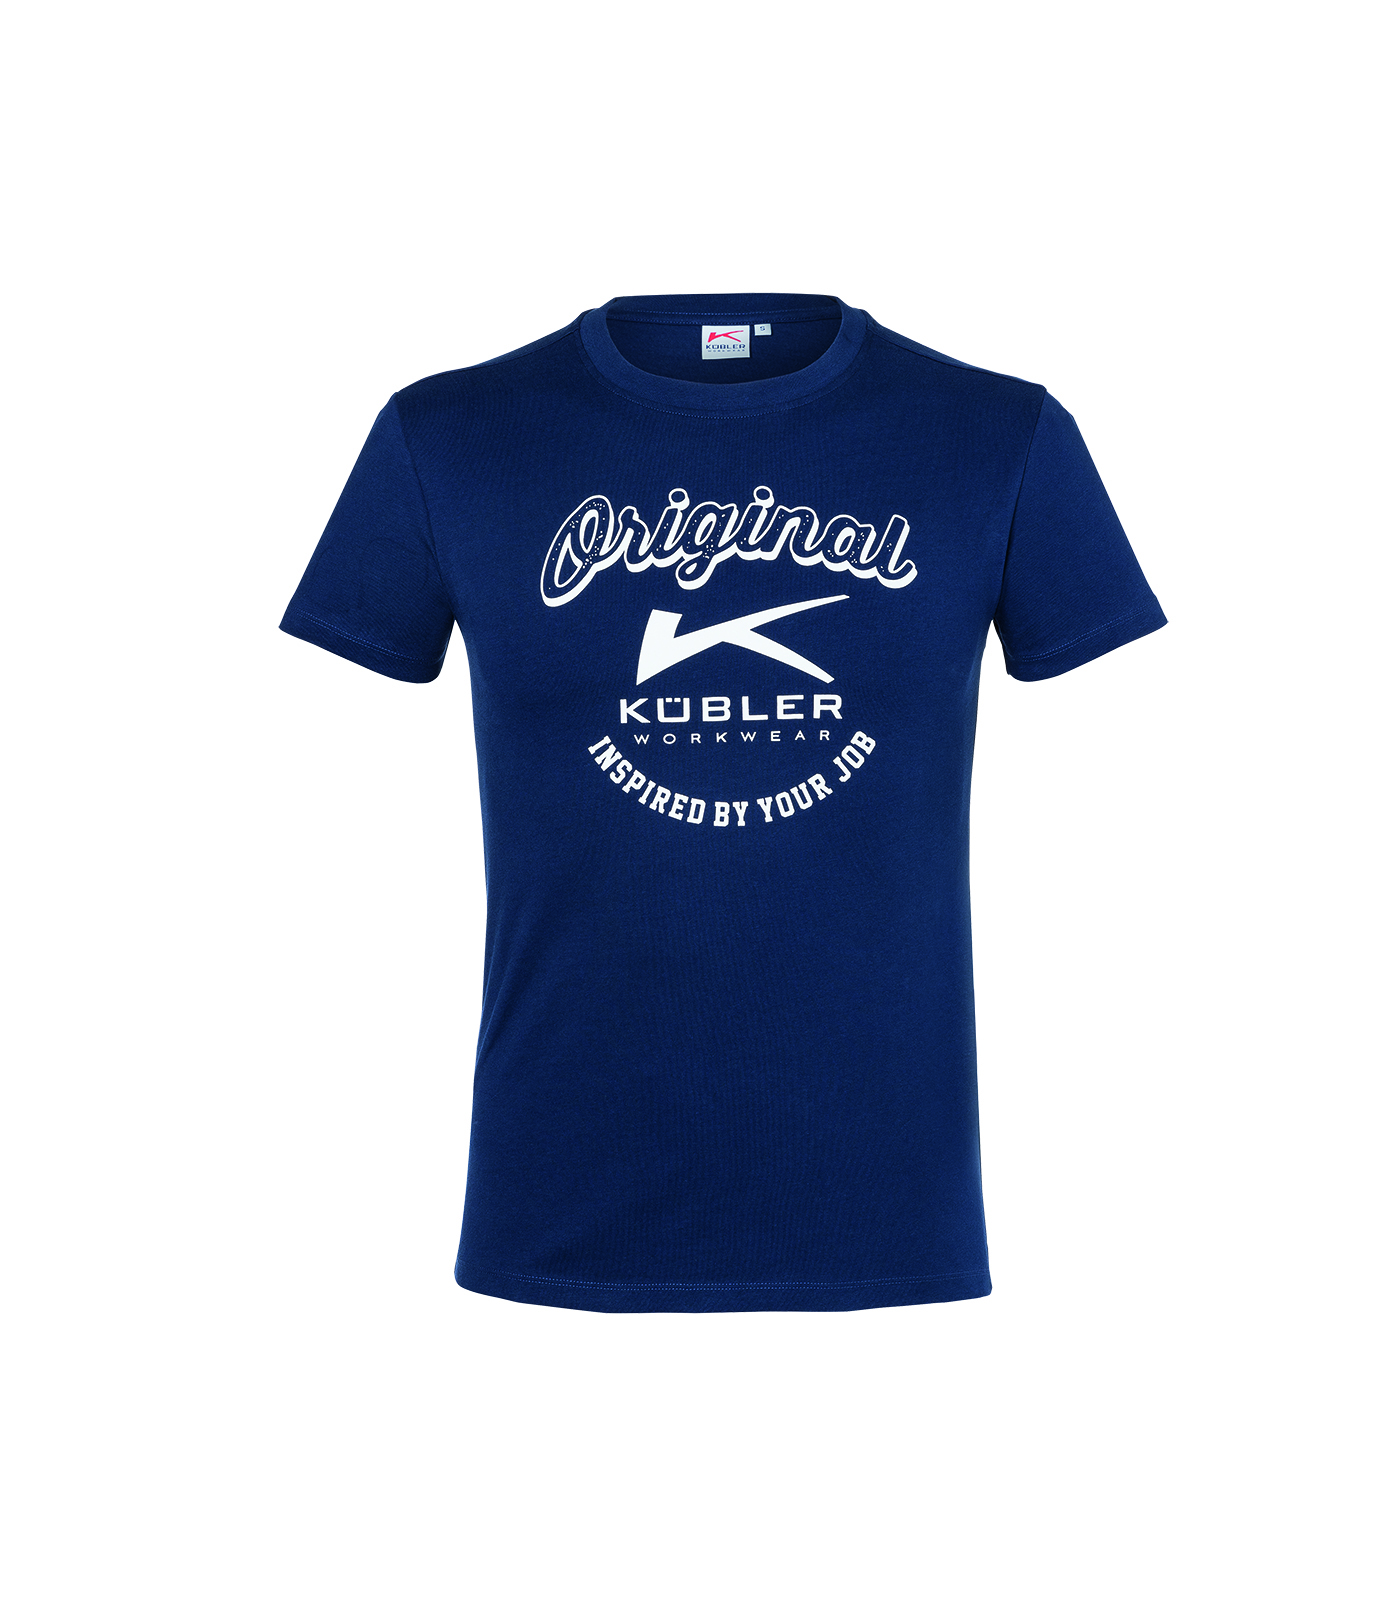 | L T-Shirt dunkelblau SHIRTS 5128 | PRINT KÜBLER | 6244-48-30-L